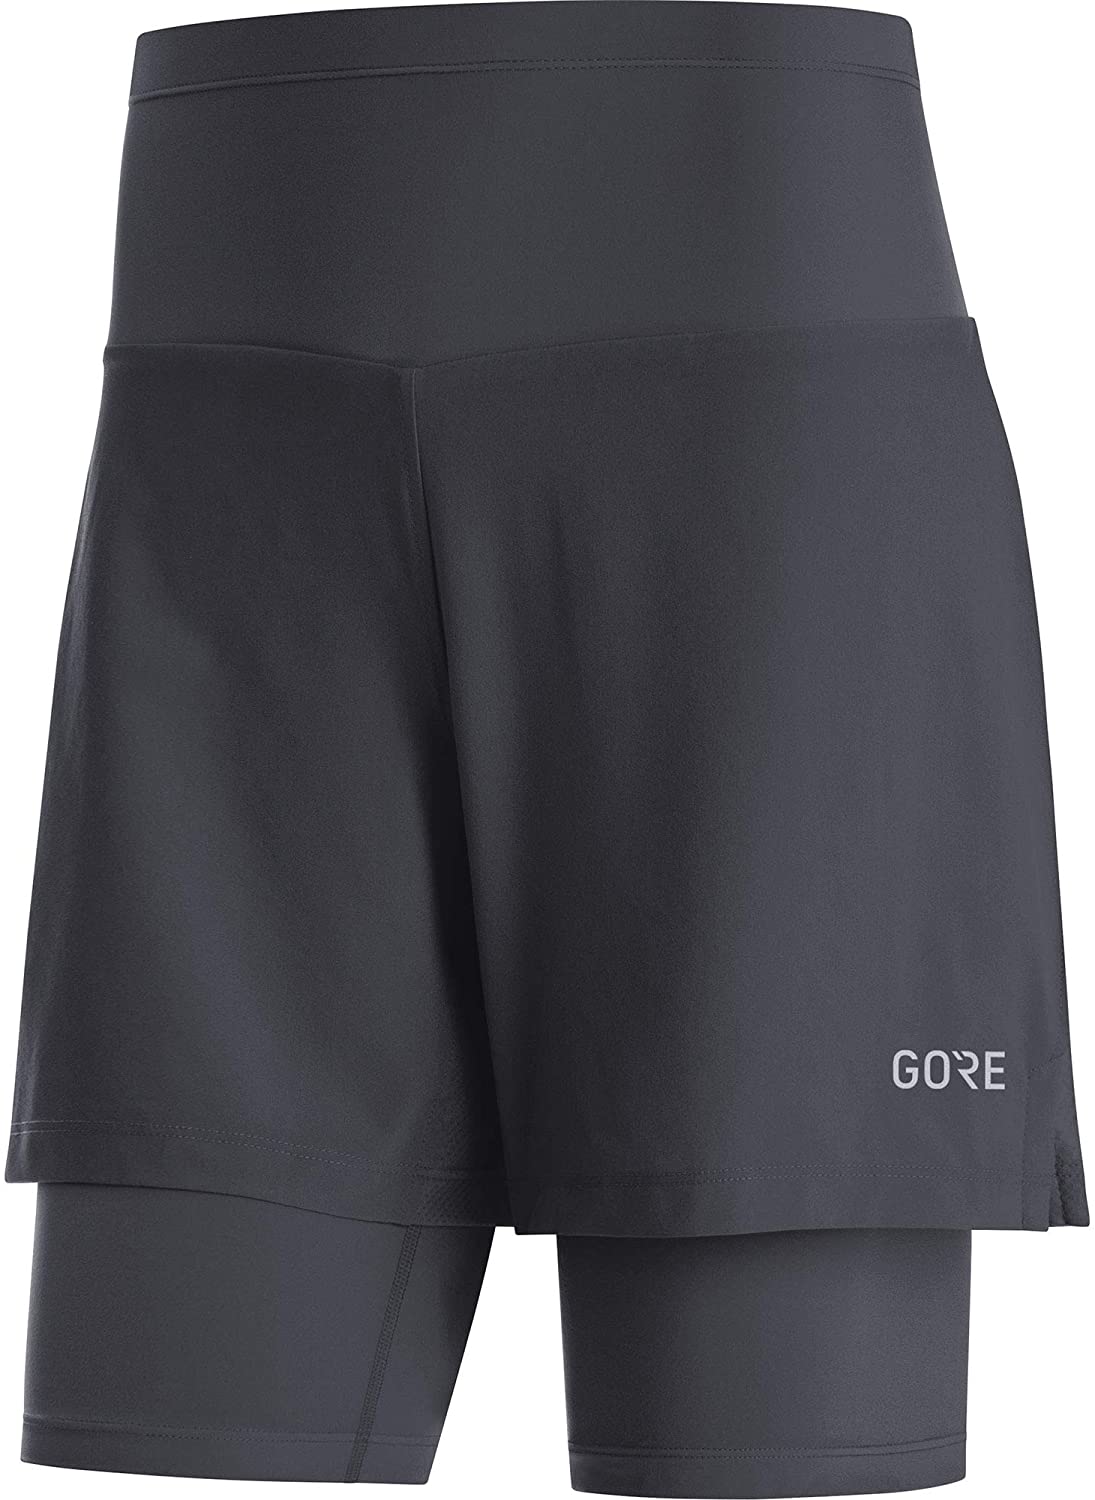 Gore Wear R5 2in1 Shorts - Hardloopshort - Dames